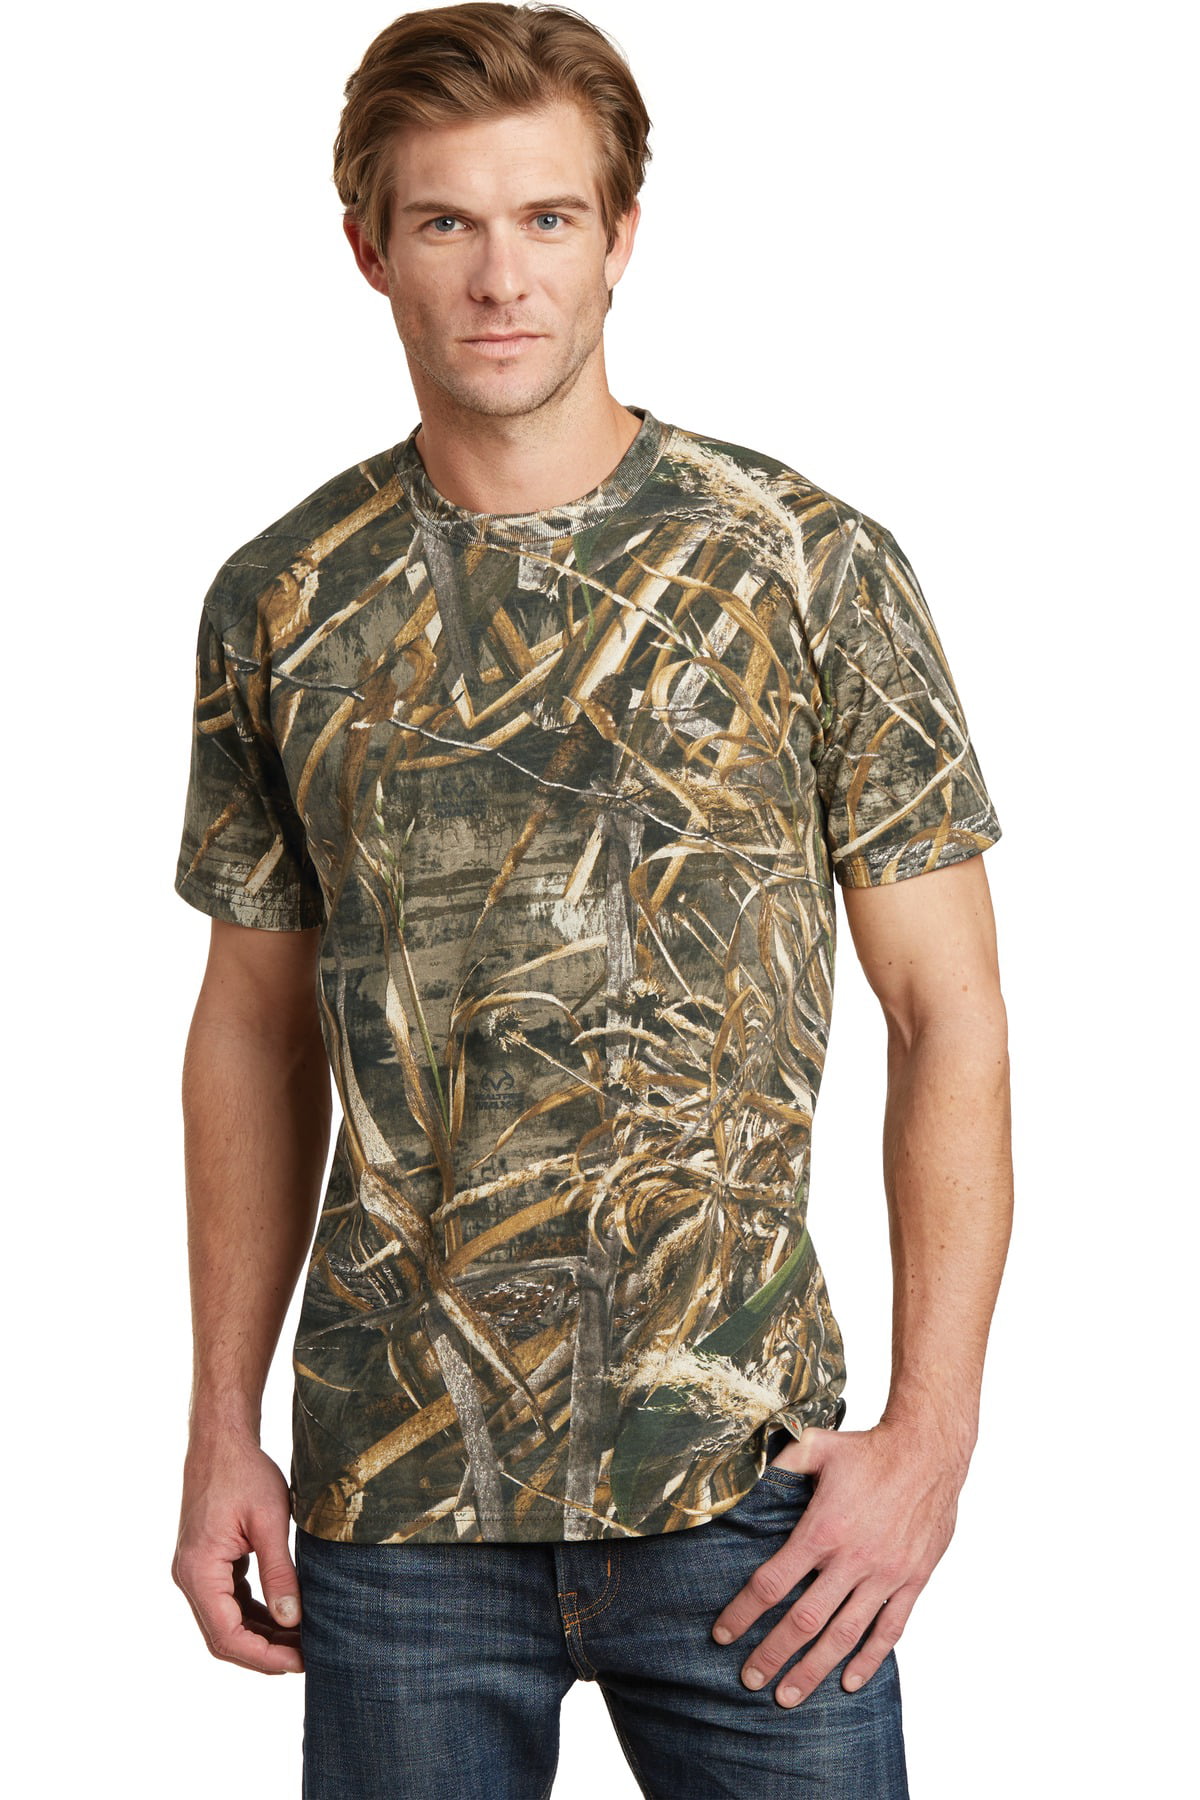 Thermal Shirt Realtree Long Sleeve Camo Green Hunting Fishing Jungle Sweatshirt 